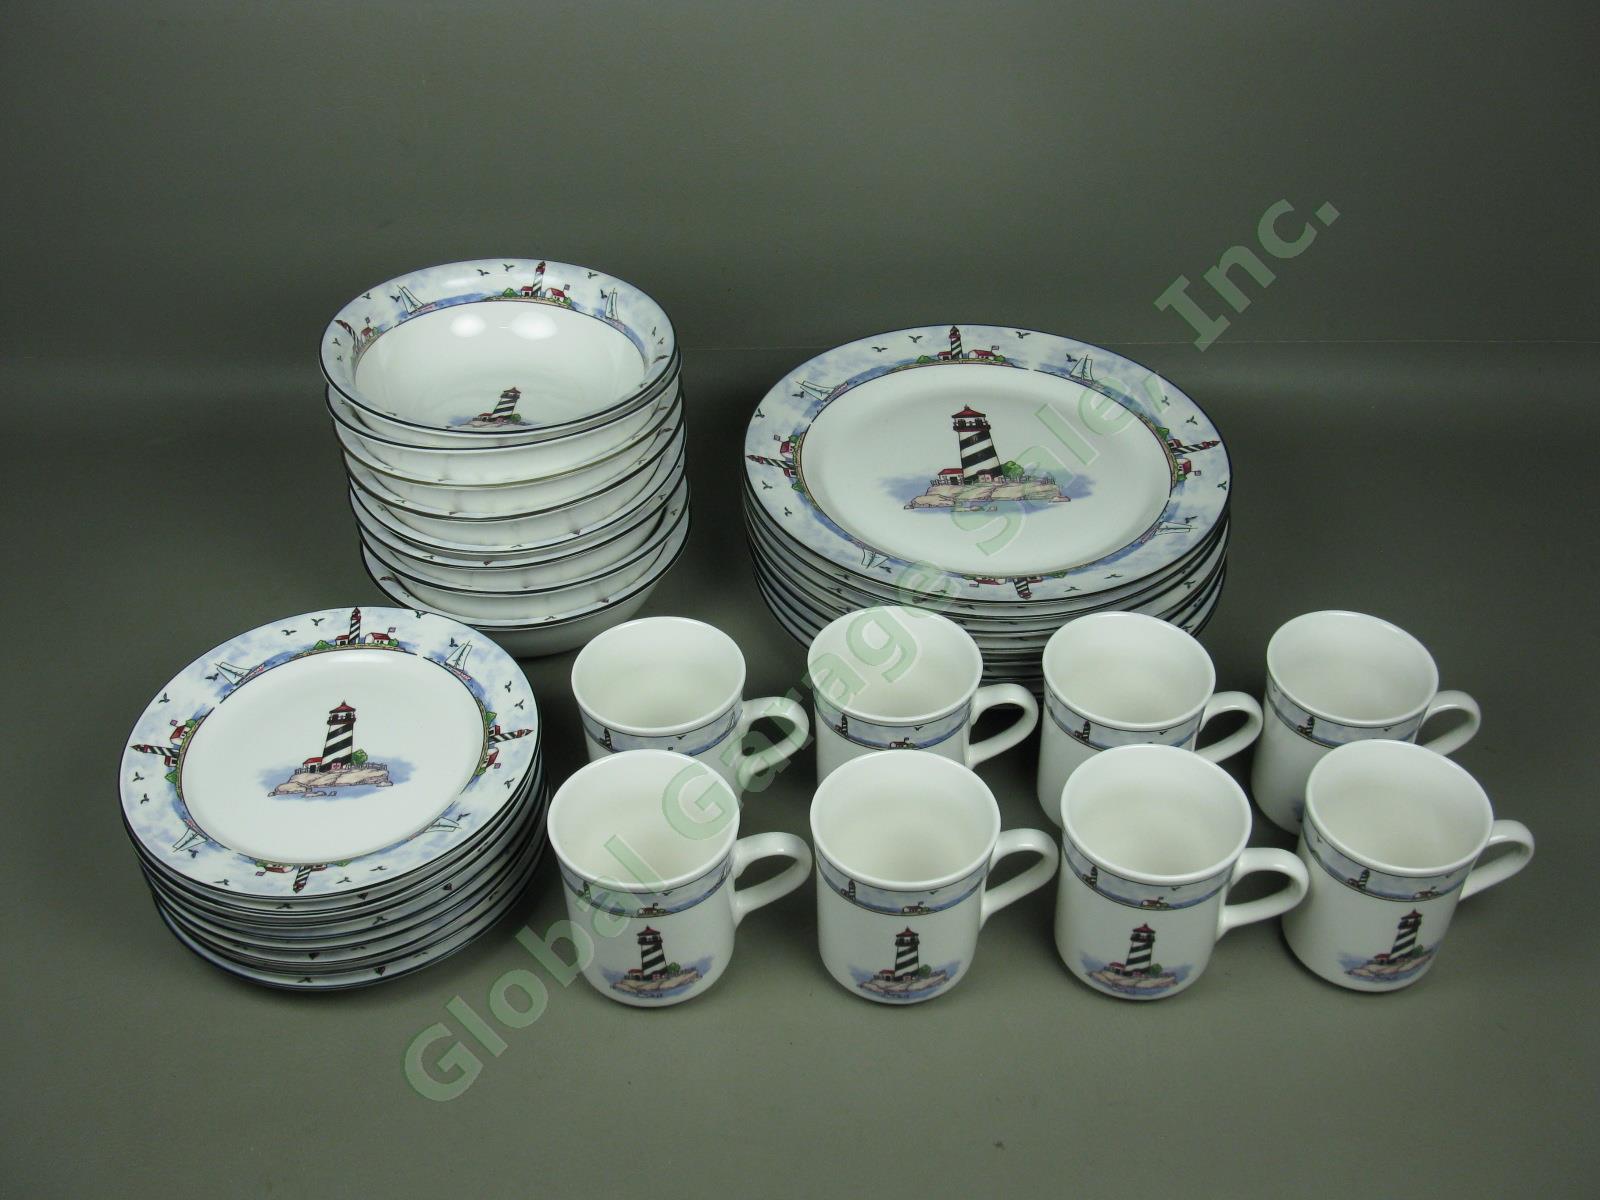 Huge 32-Pc Coastal Lighthouse Nautical Dinnerware Set Dish Plates Bowls Cups Lot